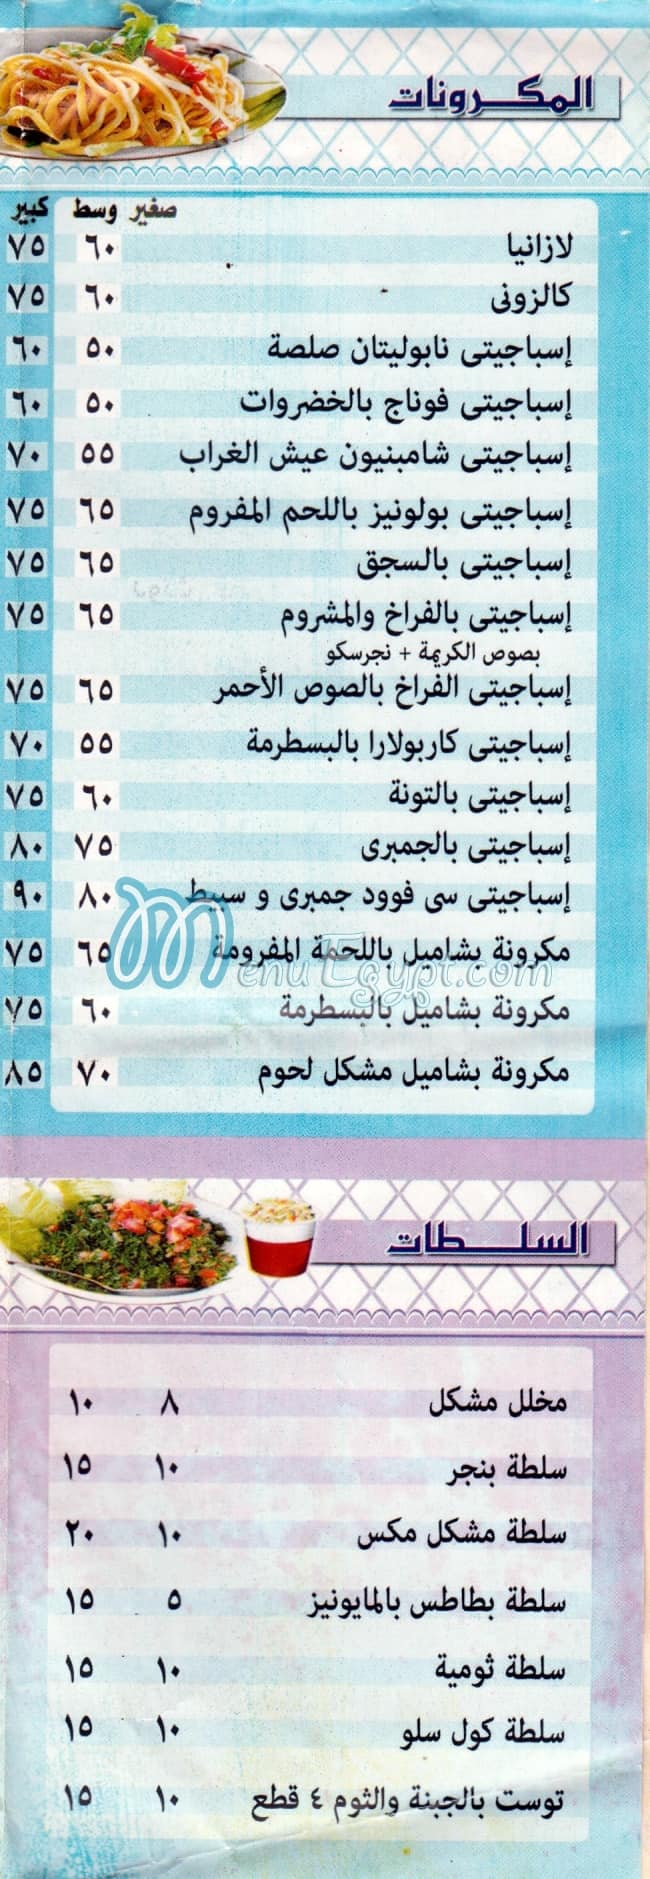 Meloky one menu Egypt